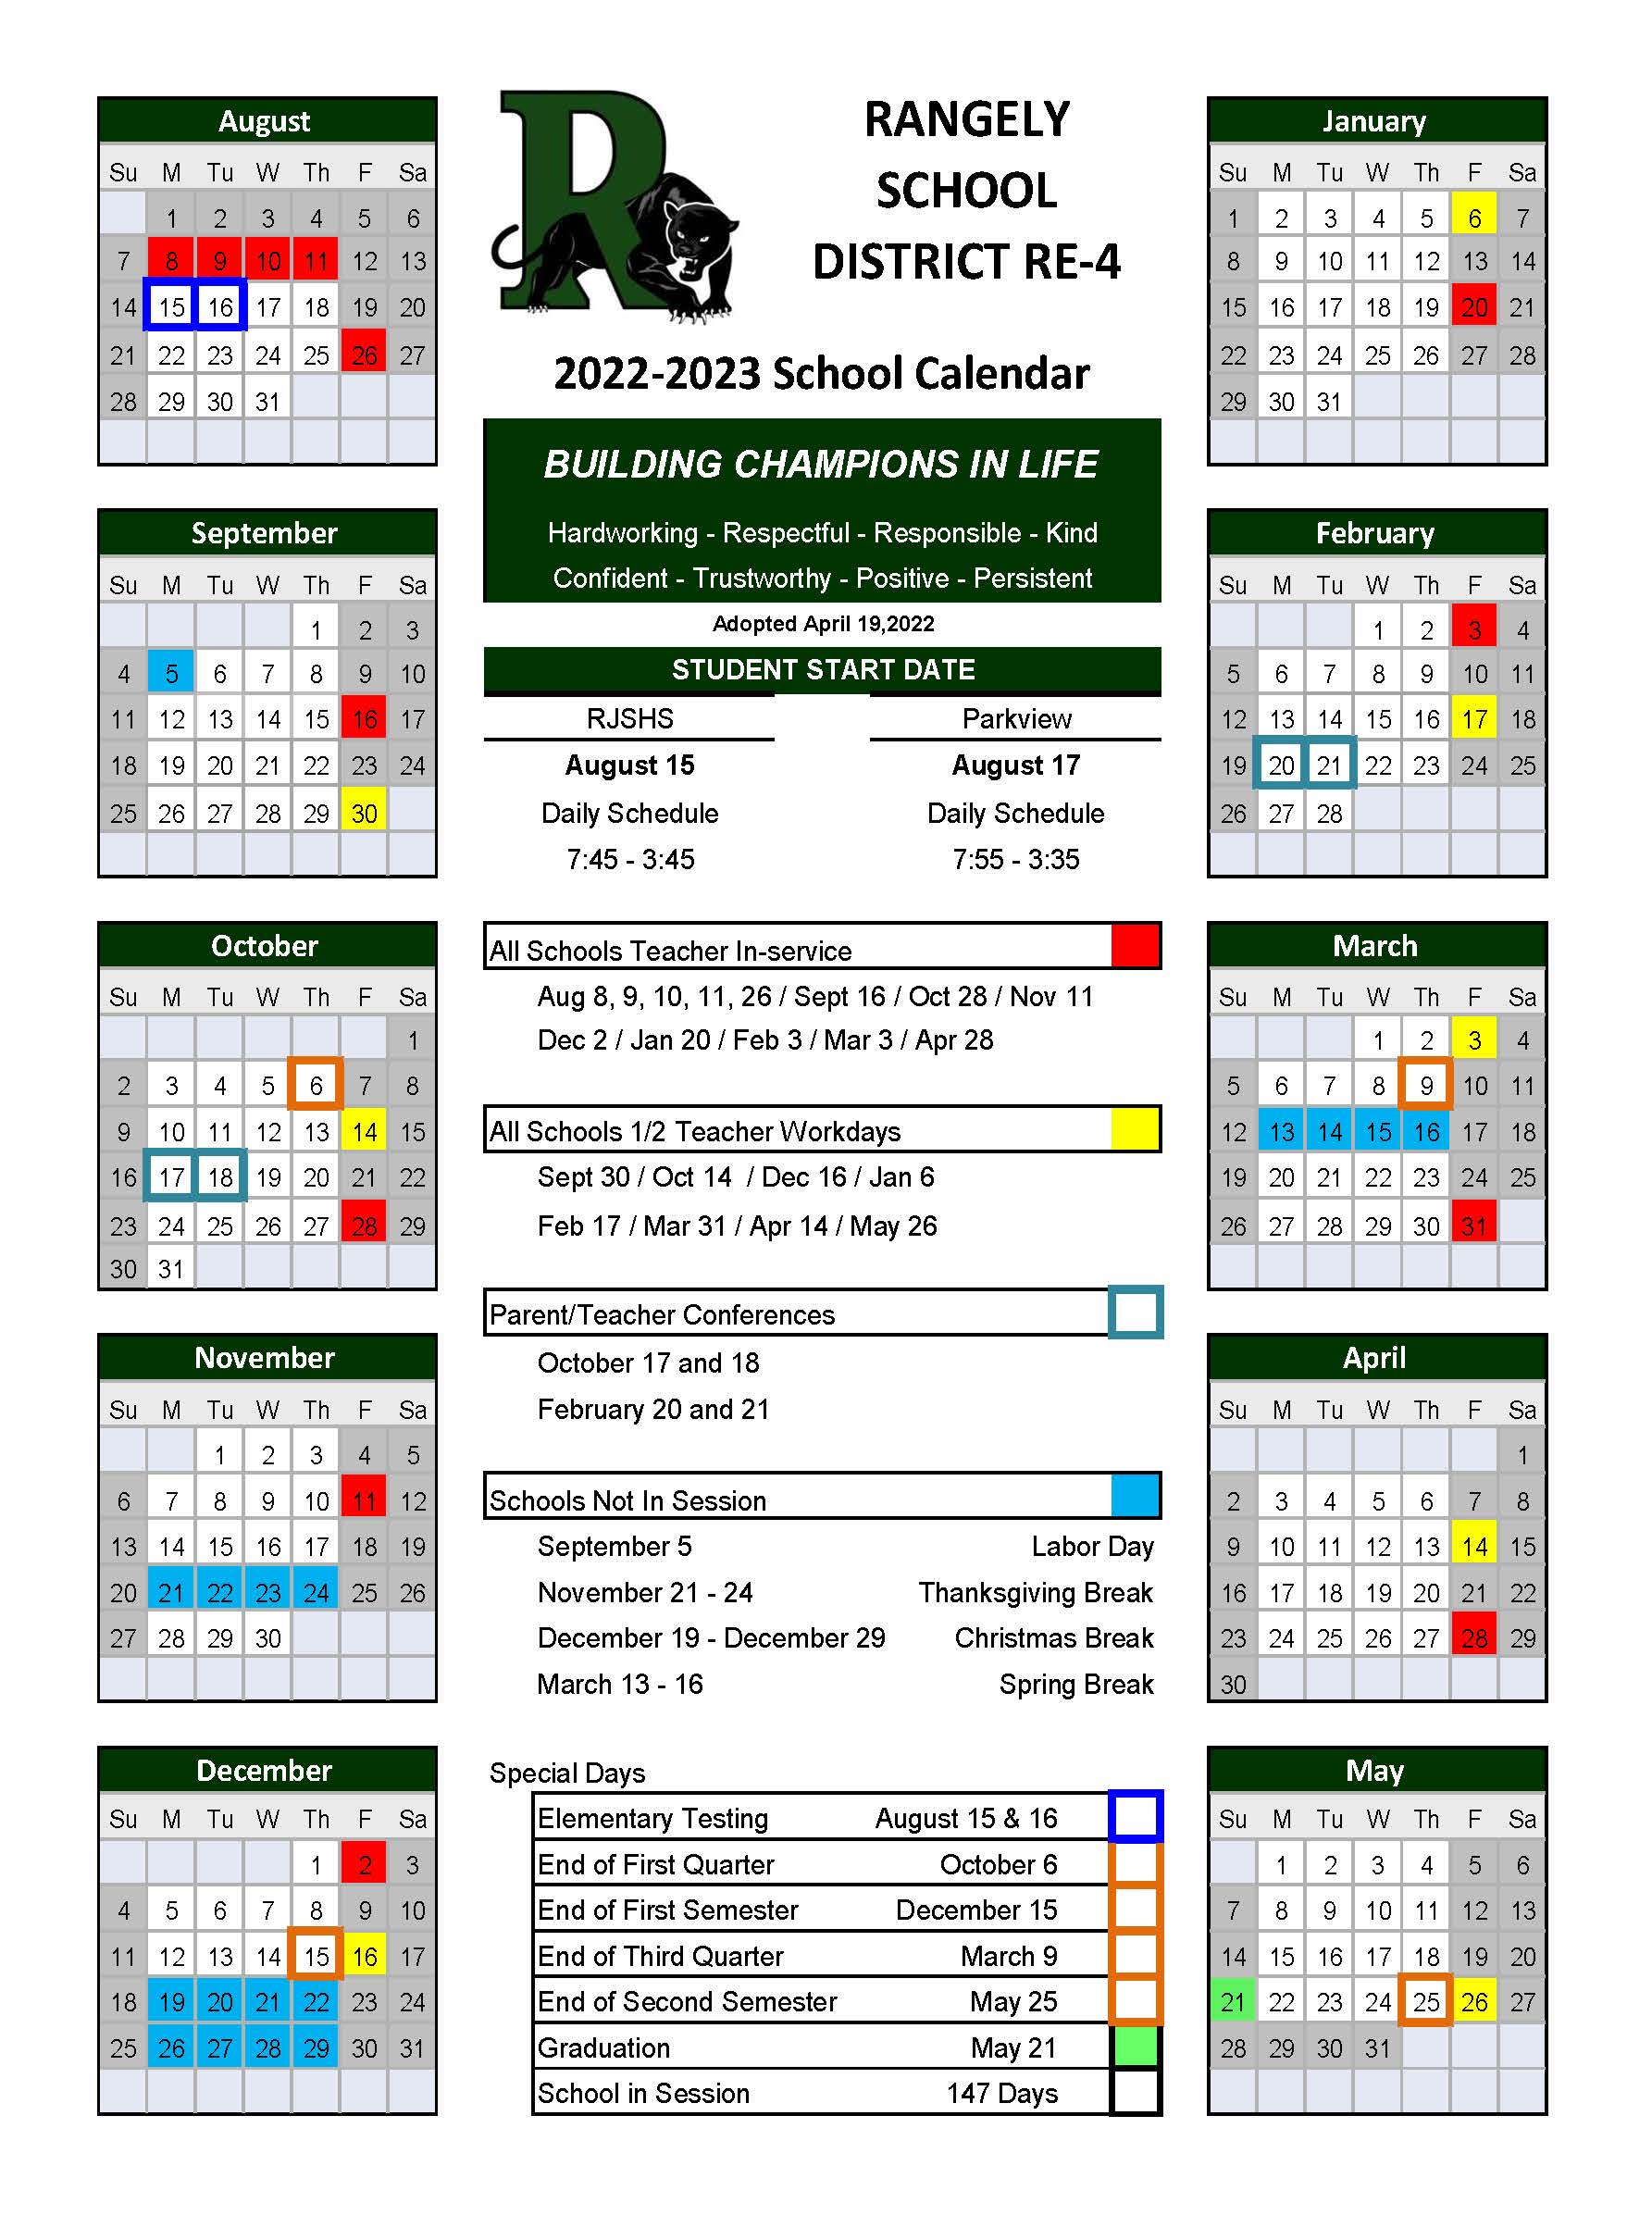 District Annual Calendar Rangely School District RE4